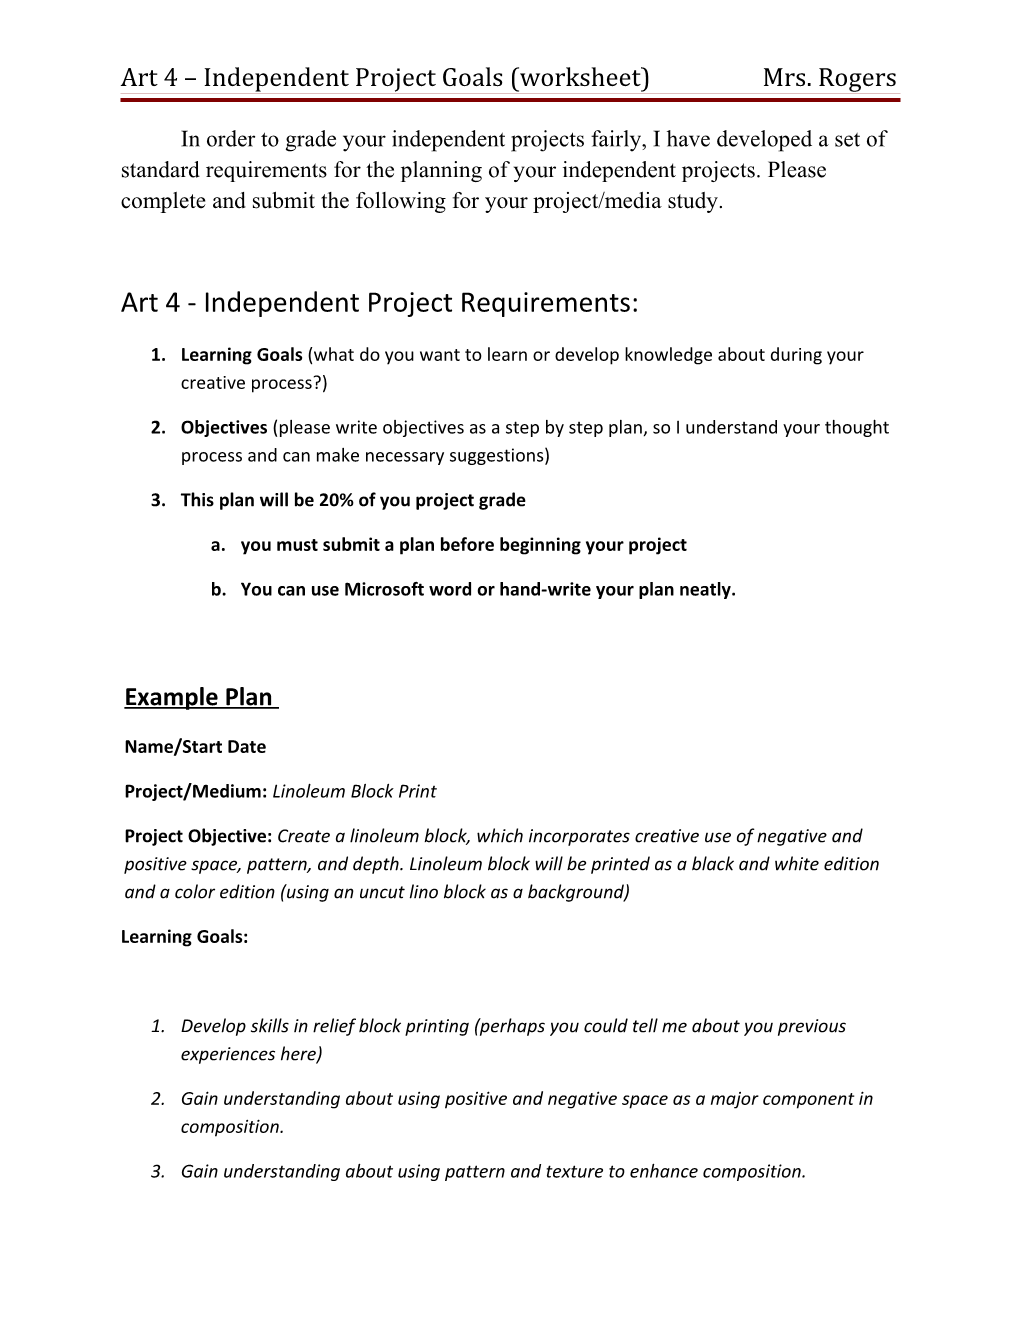 Art 4 Independent Project Goals (Worksheet) Mrs. Rogers